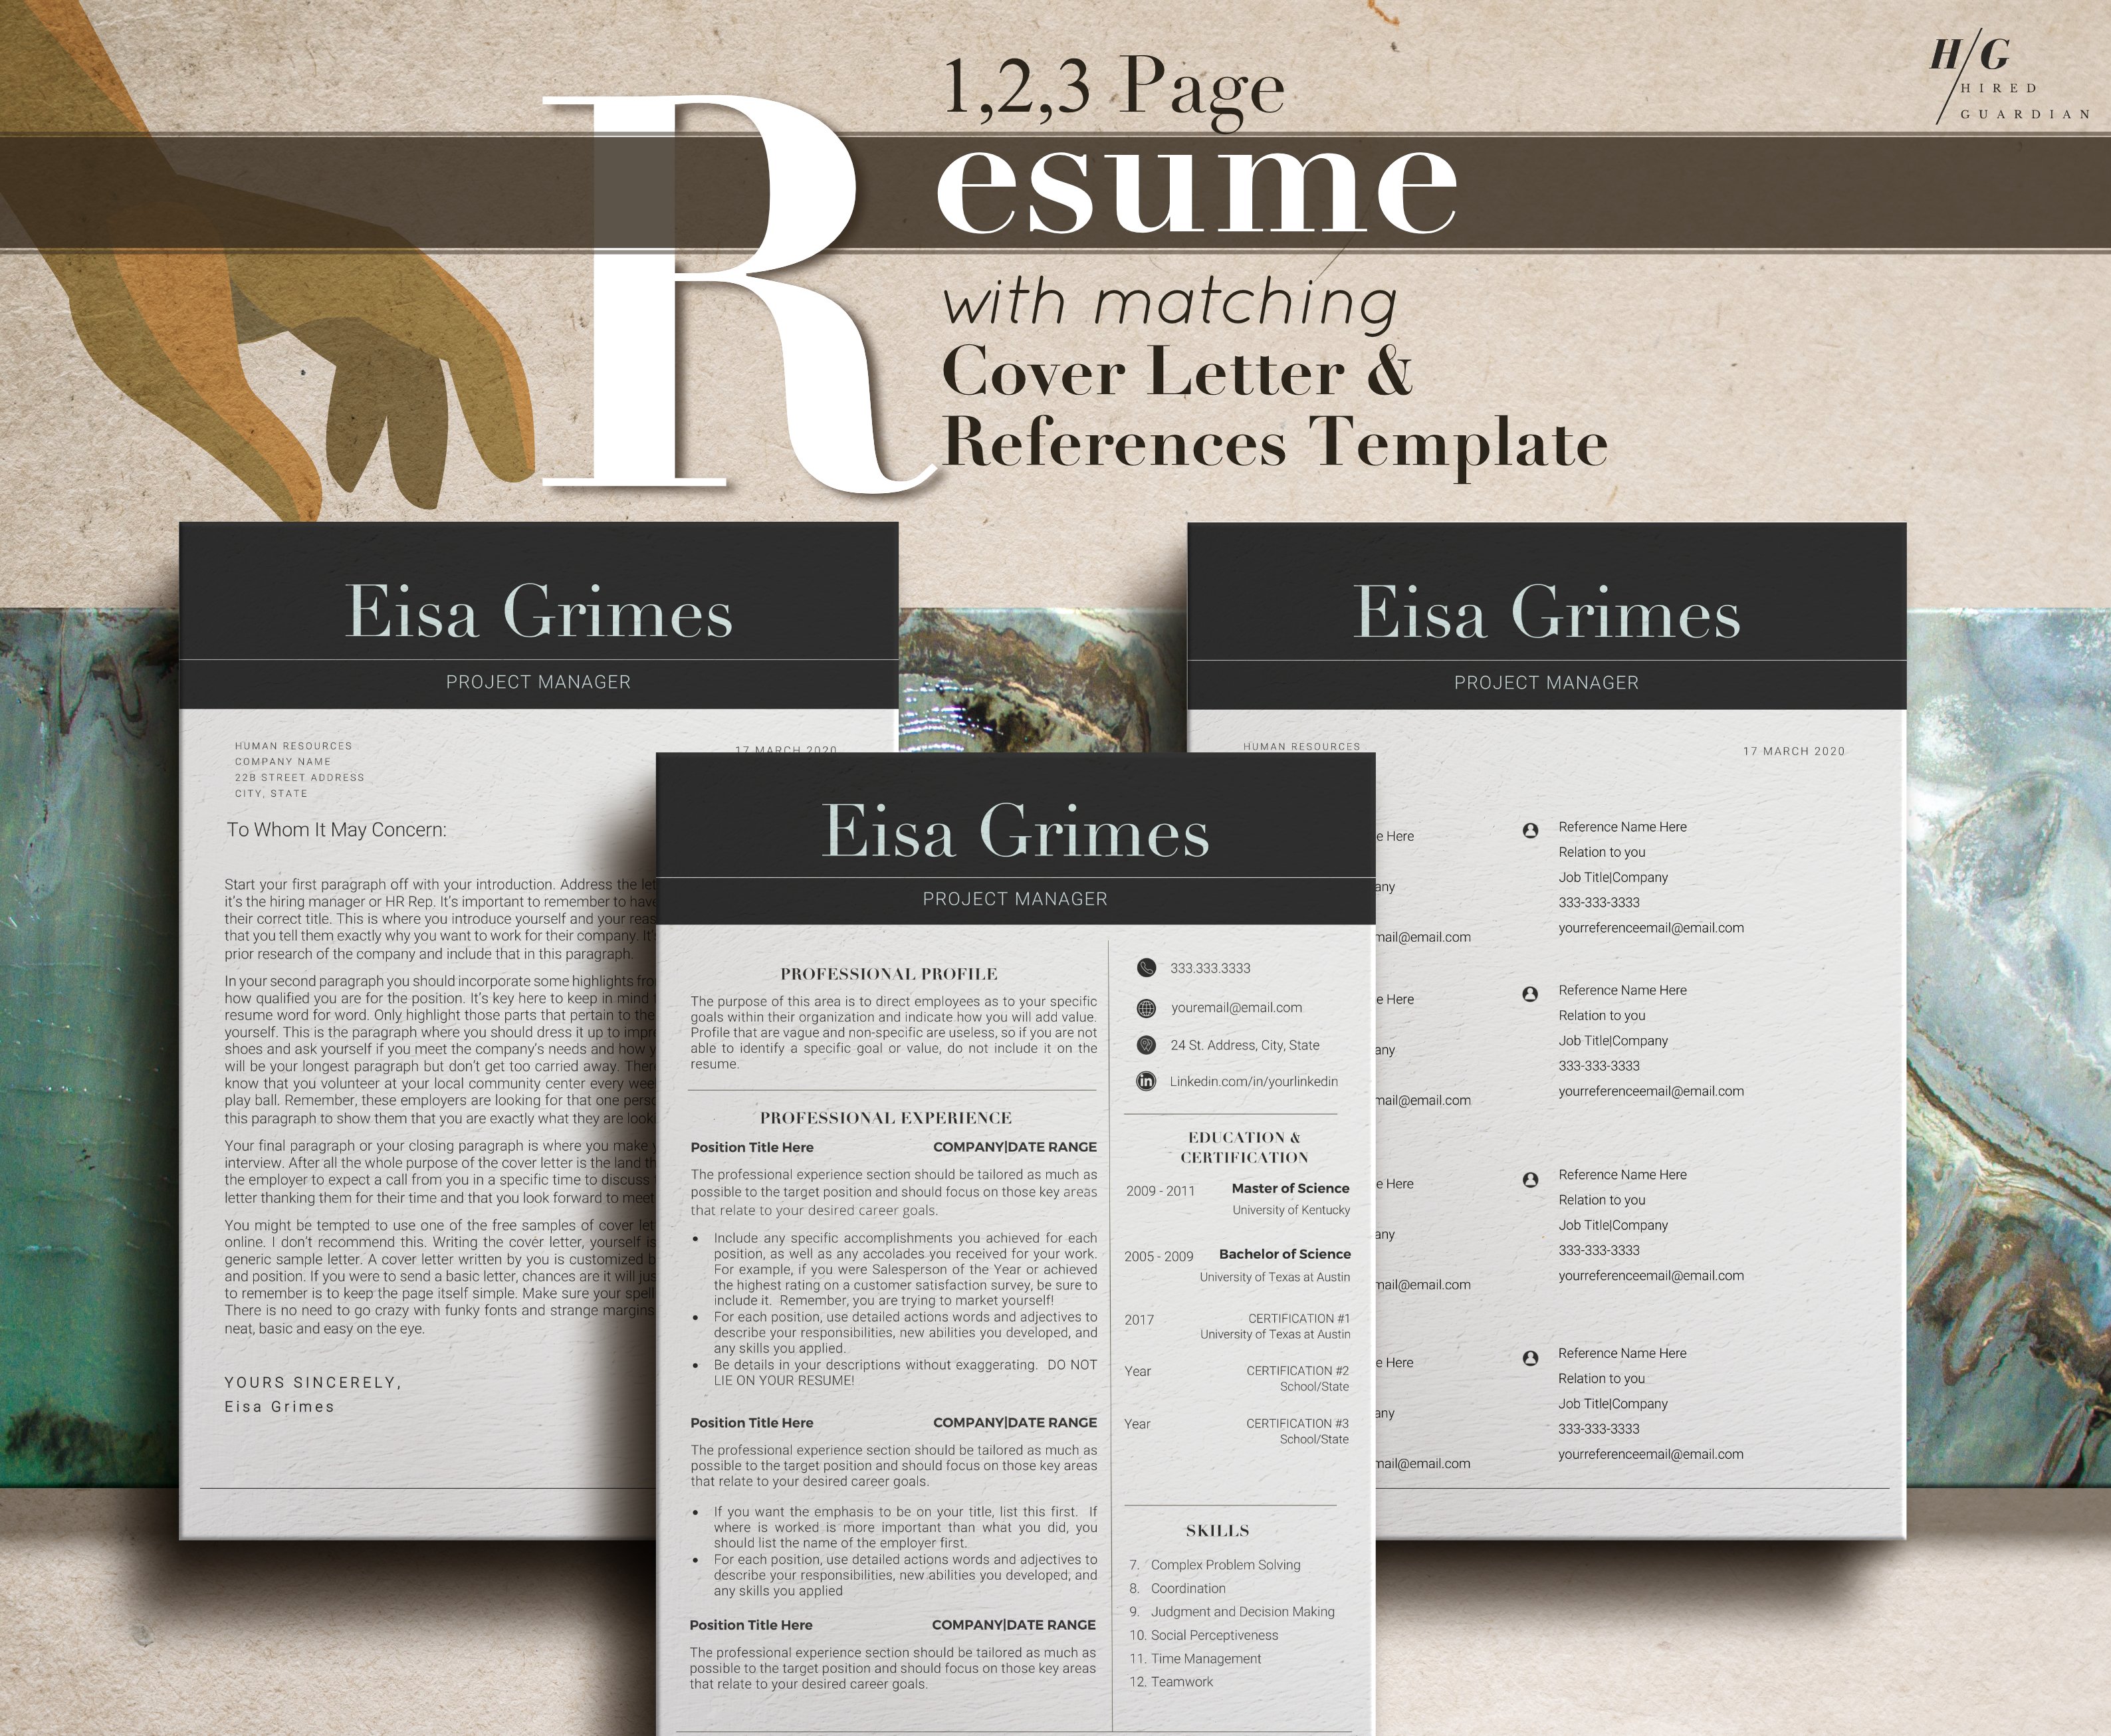 2 3 page resume template lebenslauf vorlage resume template with cover letter resume copy copy copy copy copy 575